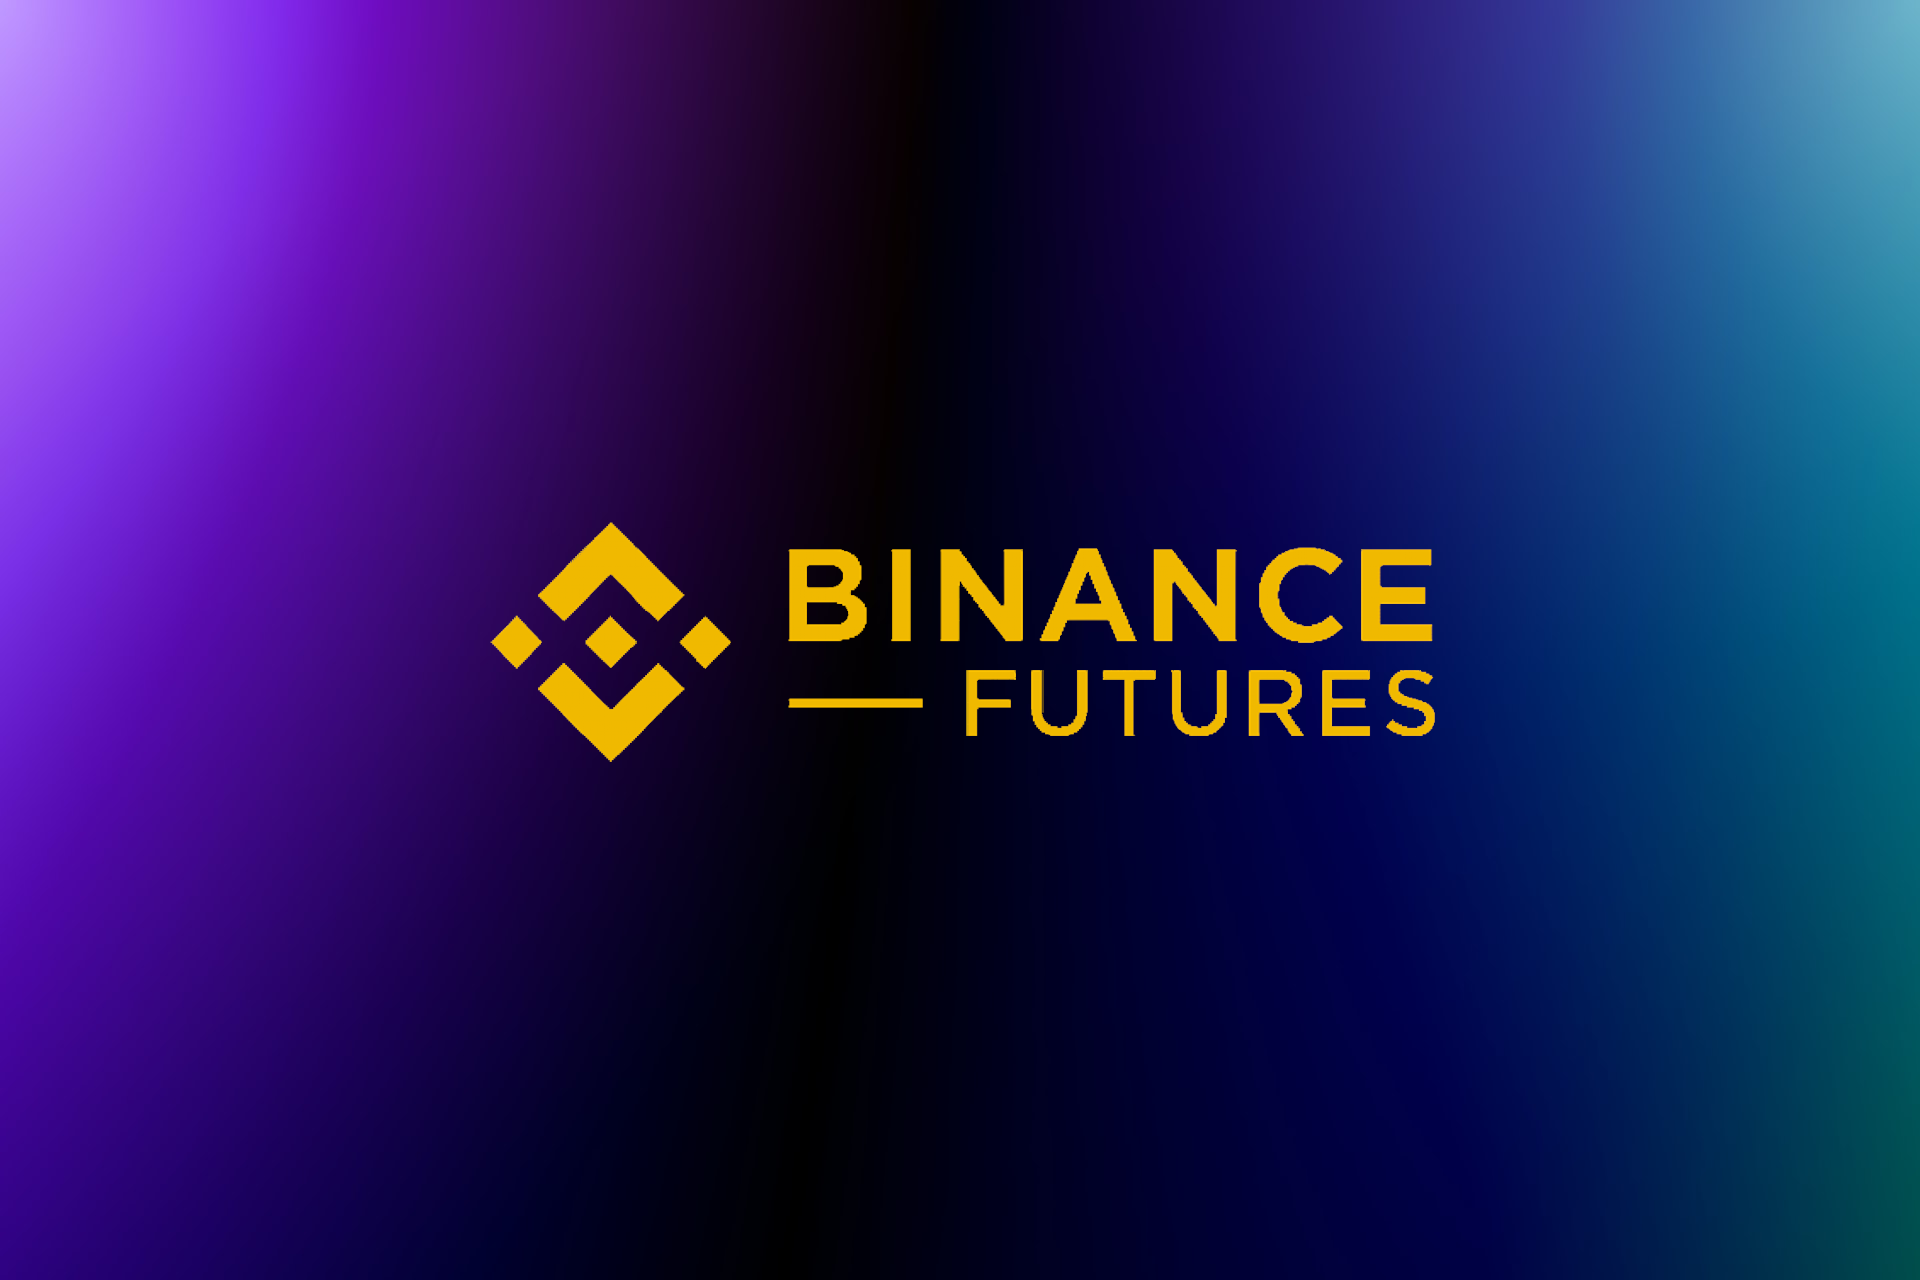 Échange de crypto-monnaie Binance Futures